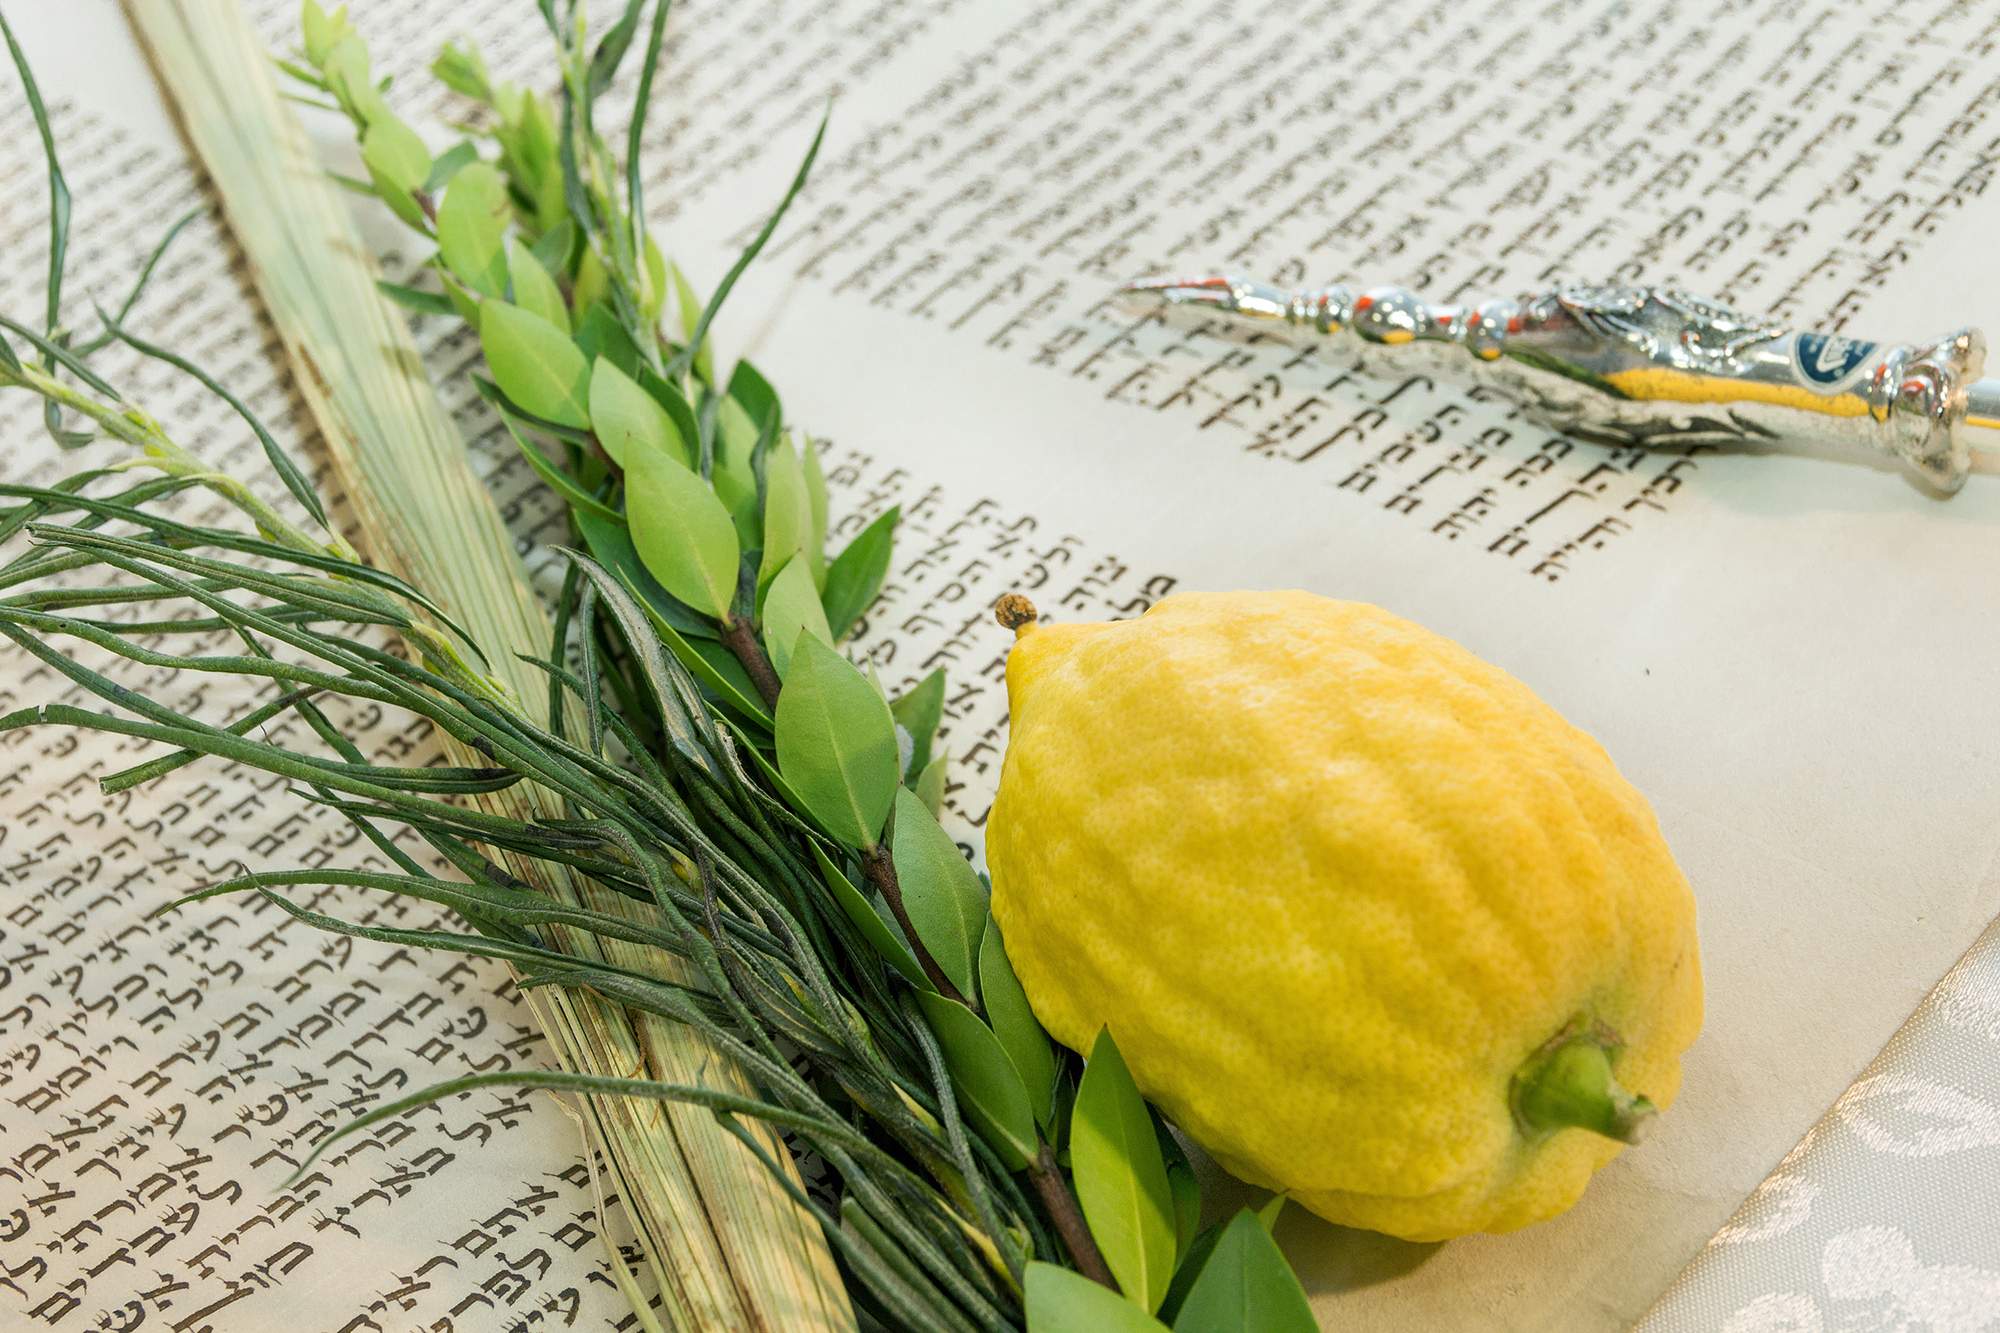 Celebrate Sukkot at Temple Zion